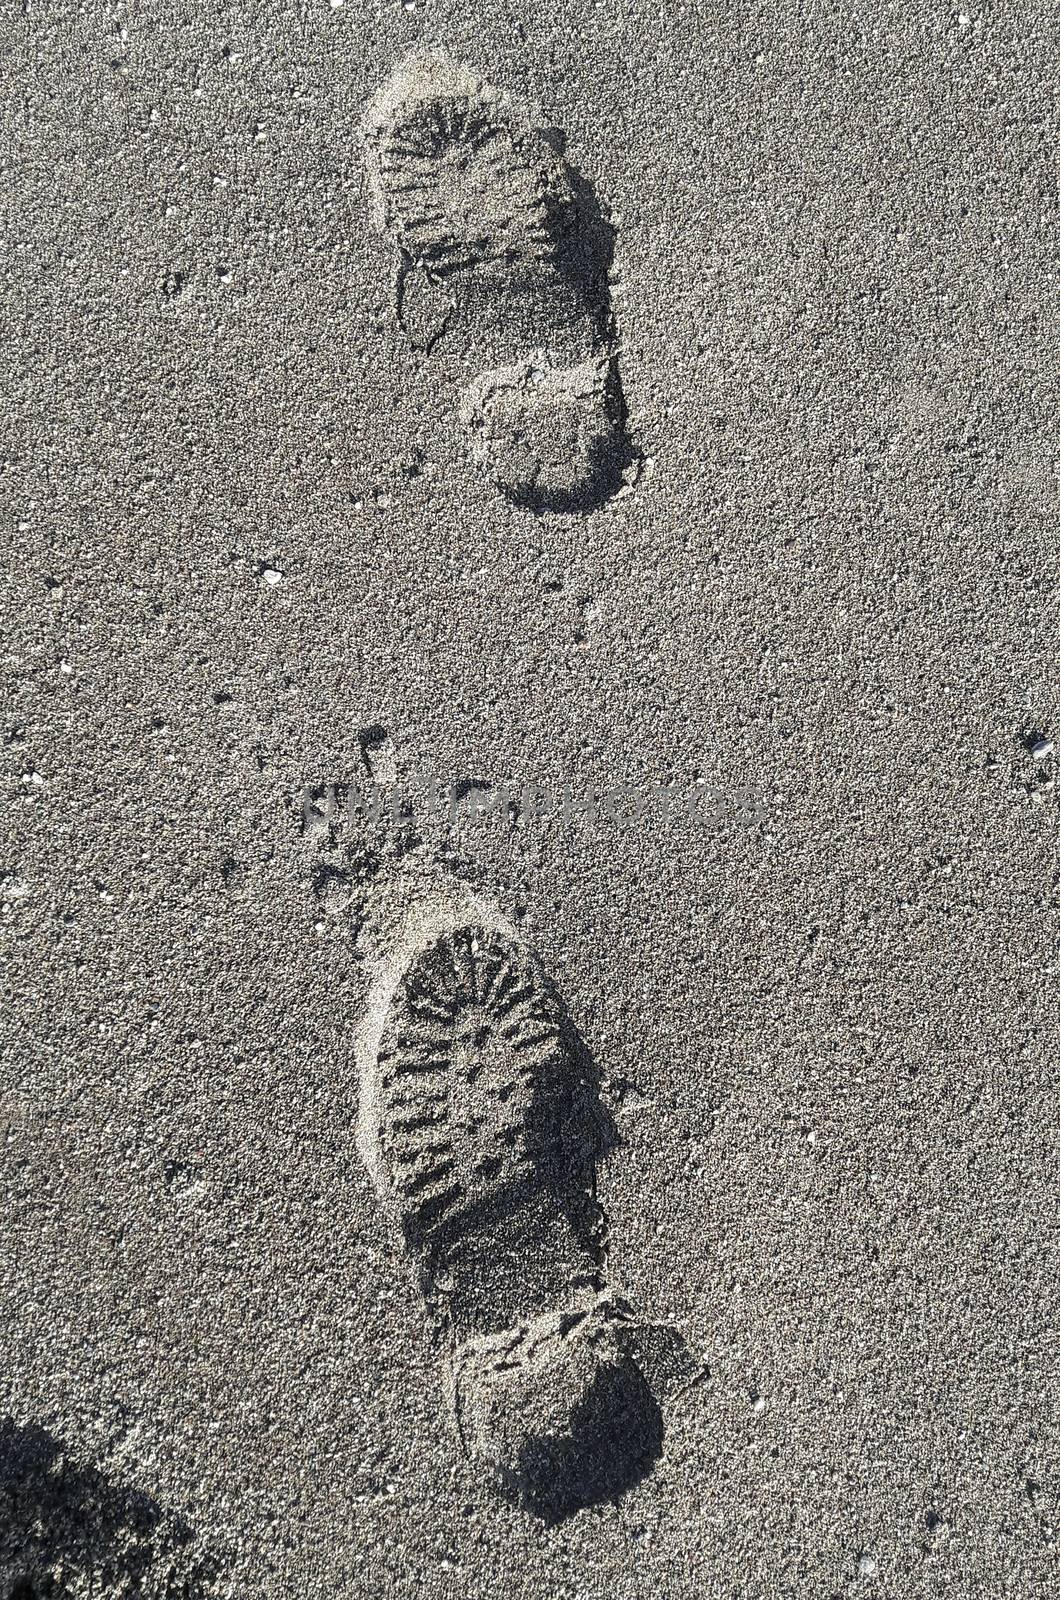 Shoe footprint imprints on a sandy beach